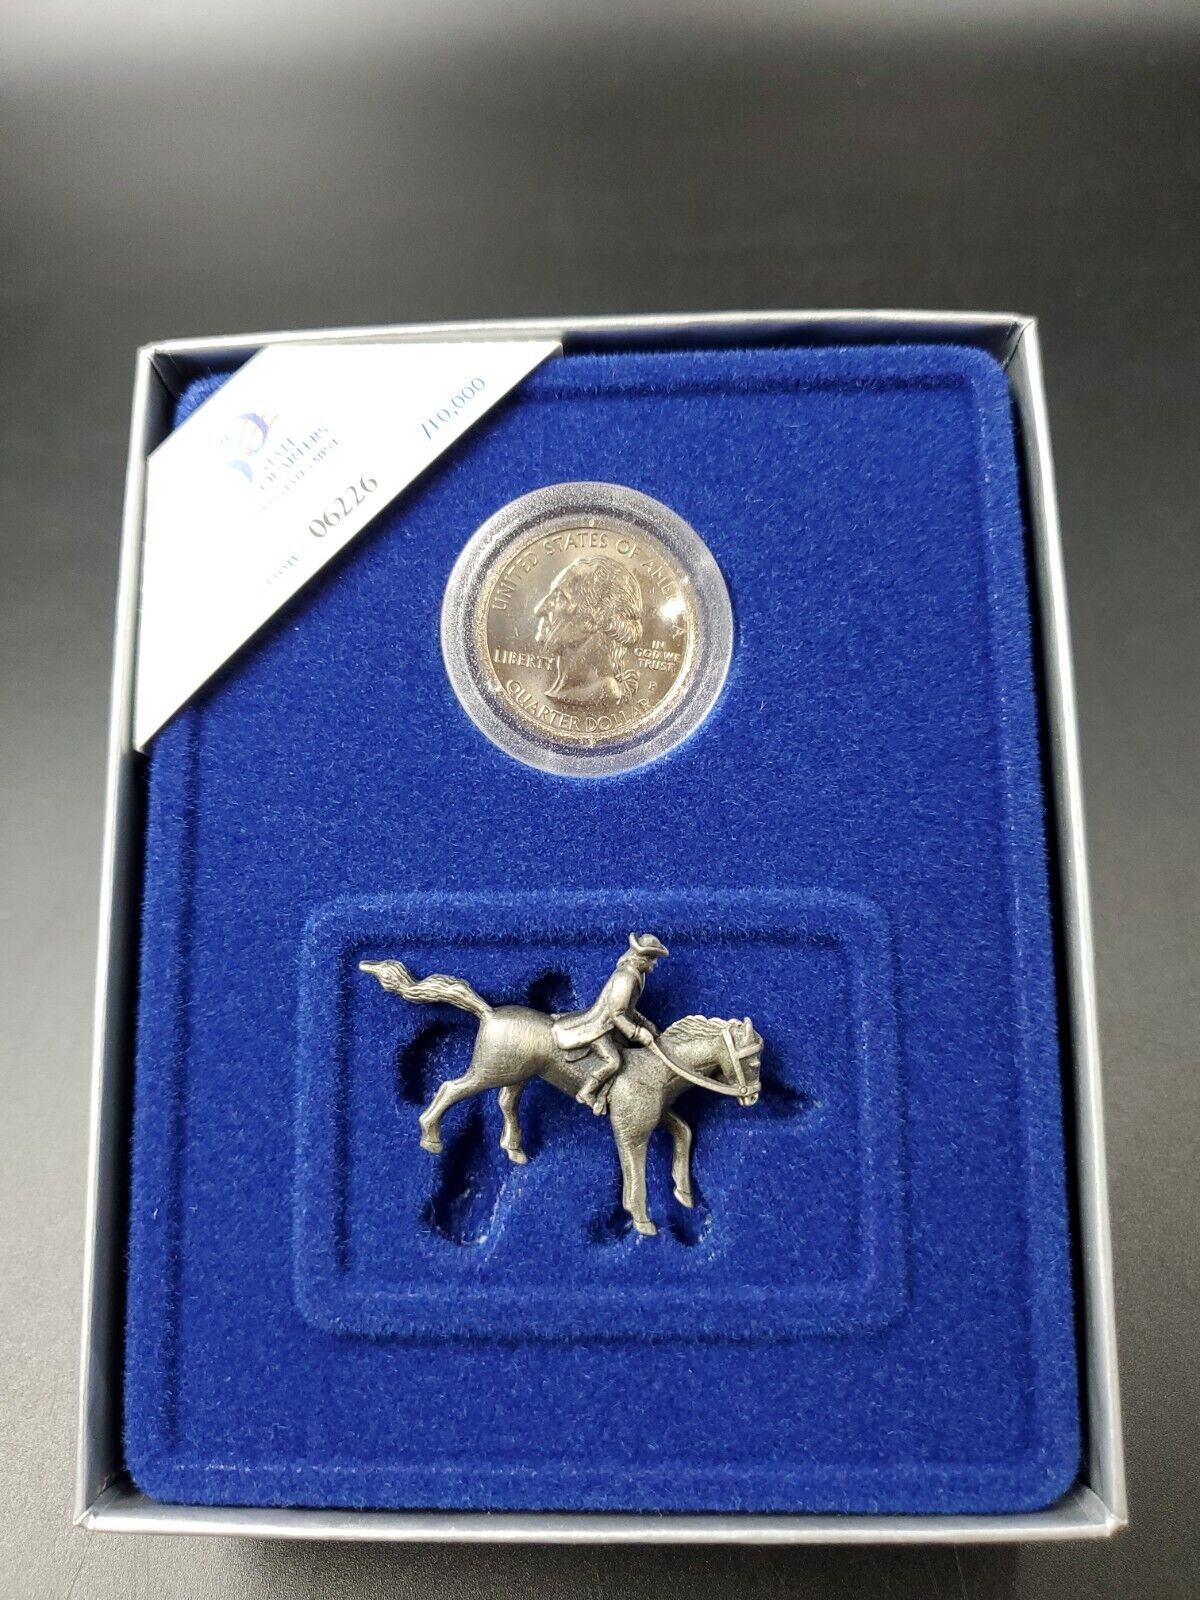 1999 Delaware State Quarter American Spirit Coin & Figurine Set in Box